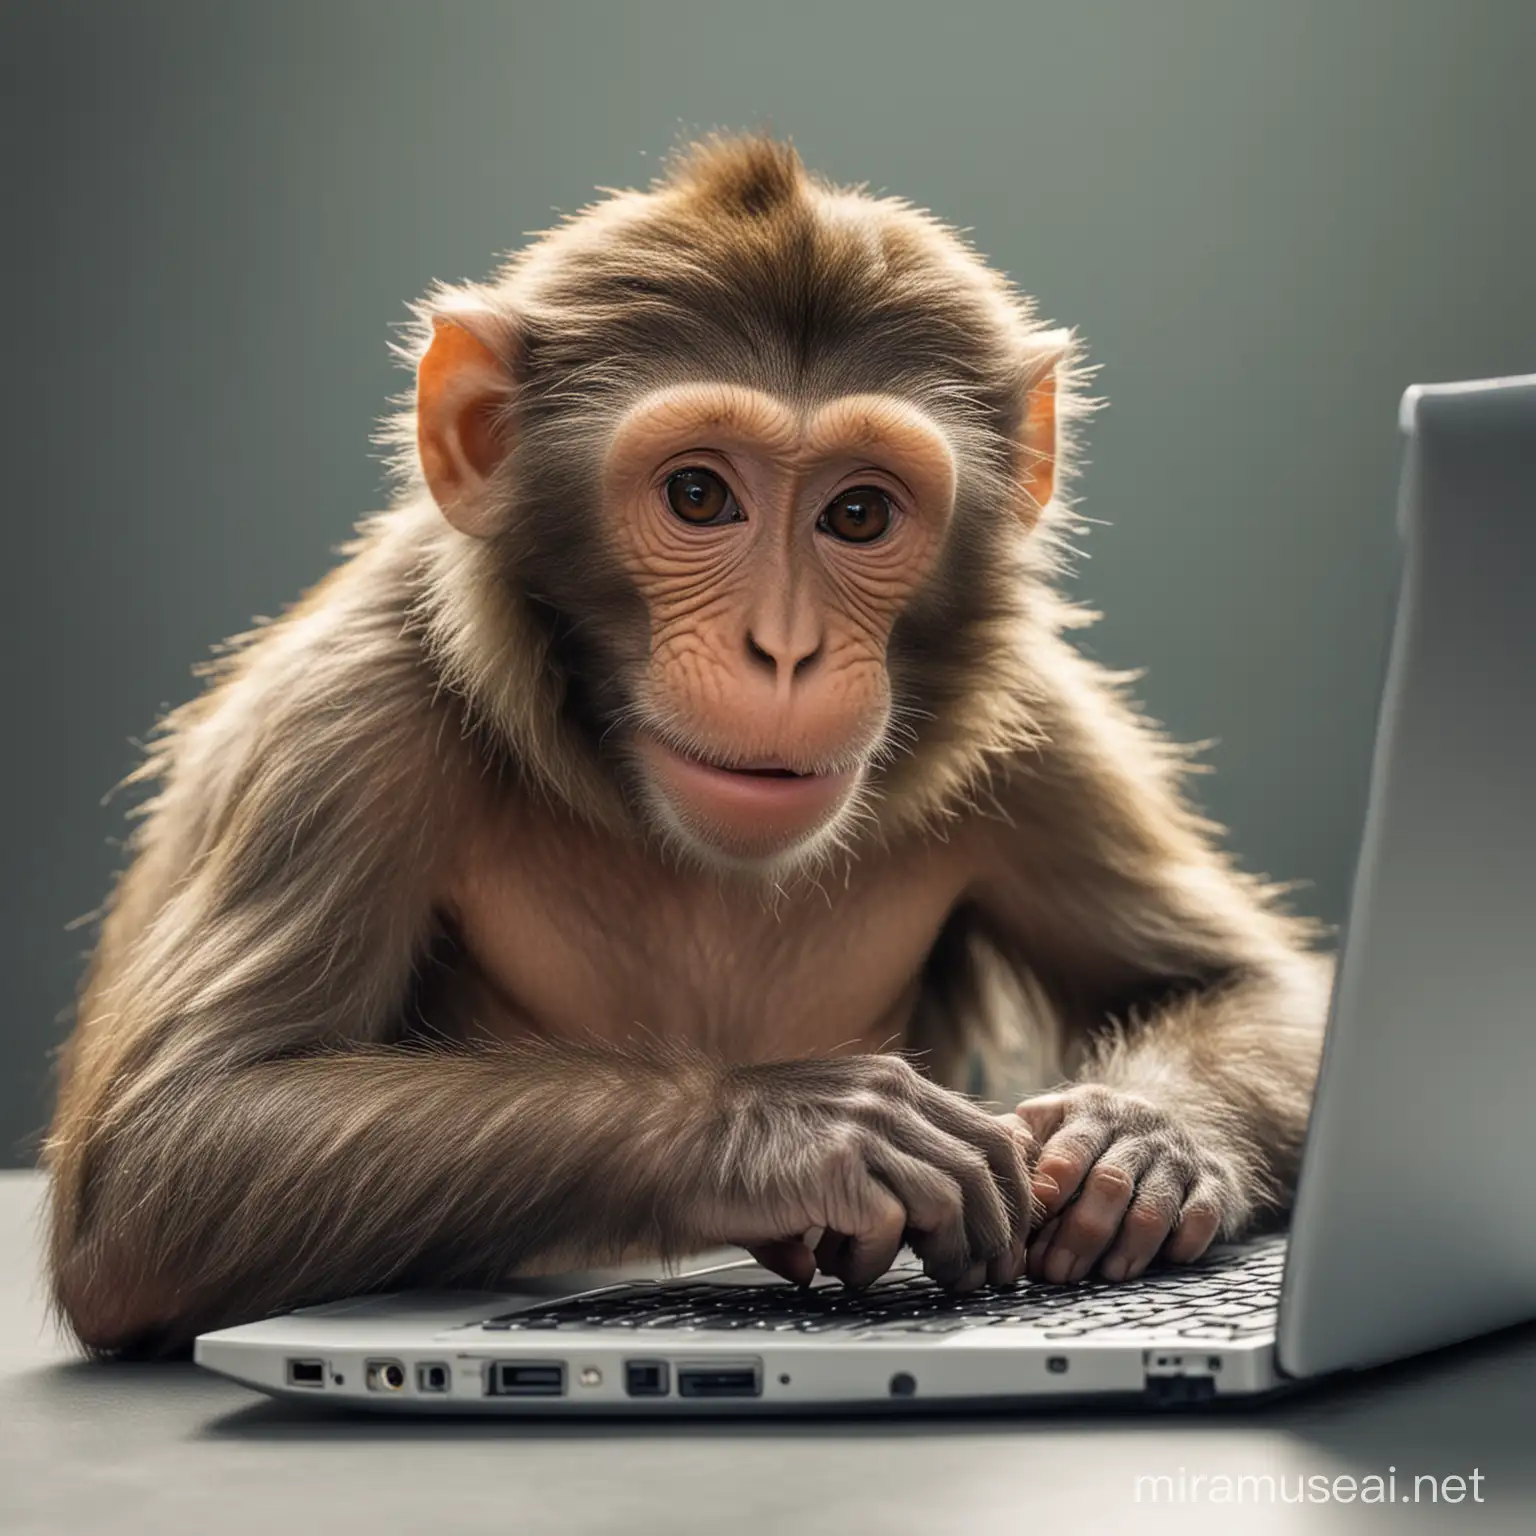 Monkey programming on a laptop